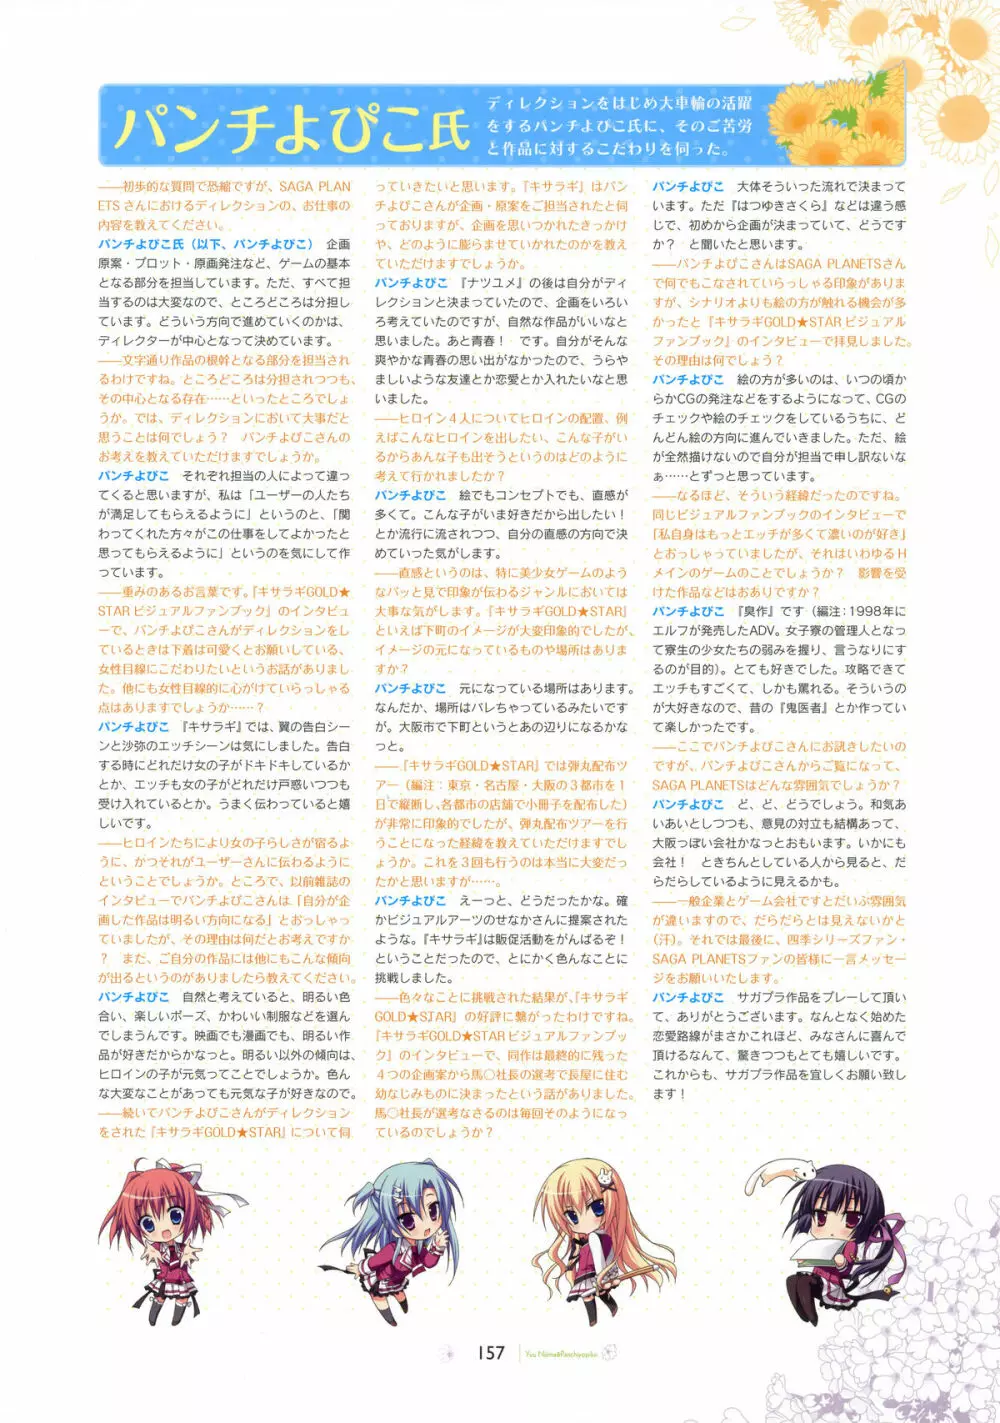 SAGA PLANETS 四季シリーズ All Season Art Works 158ページ